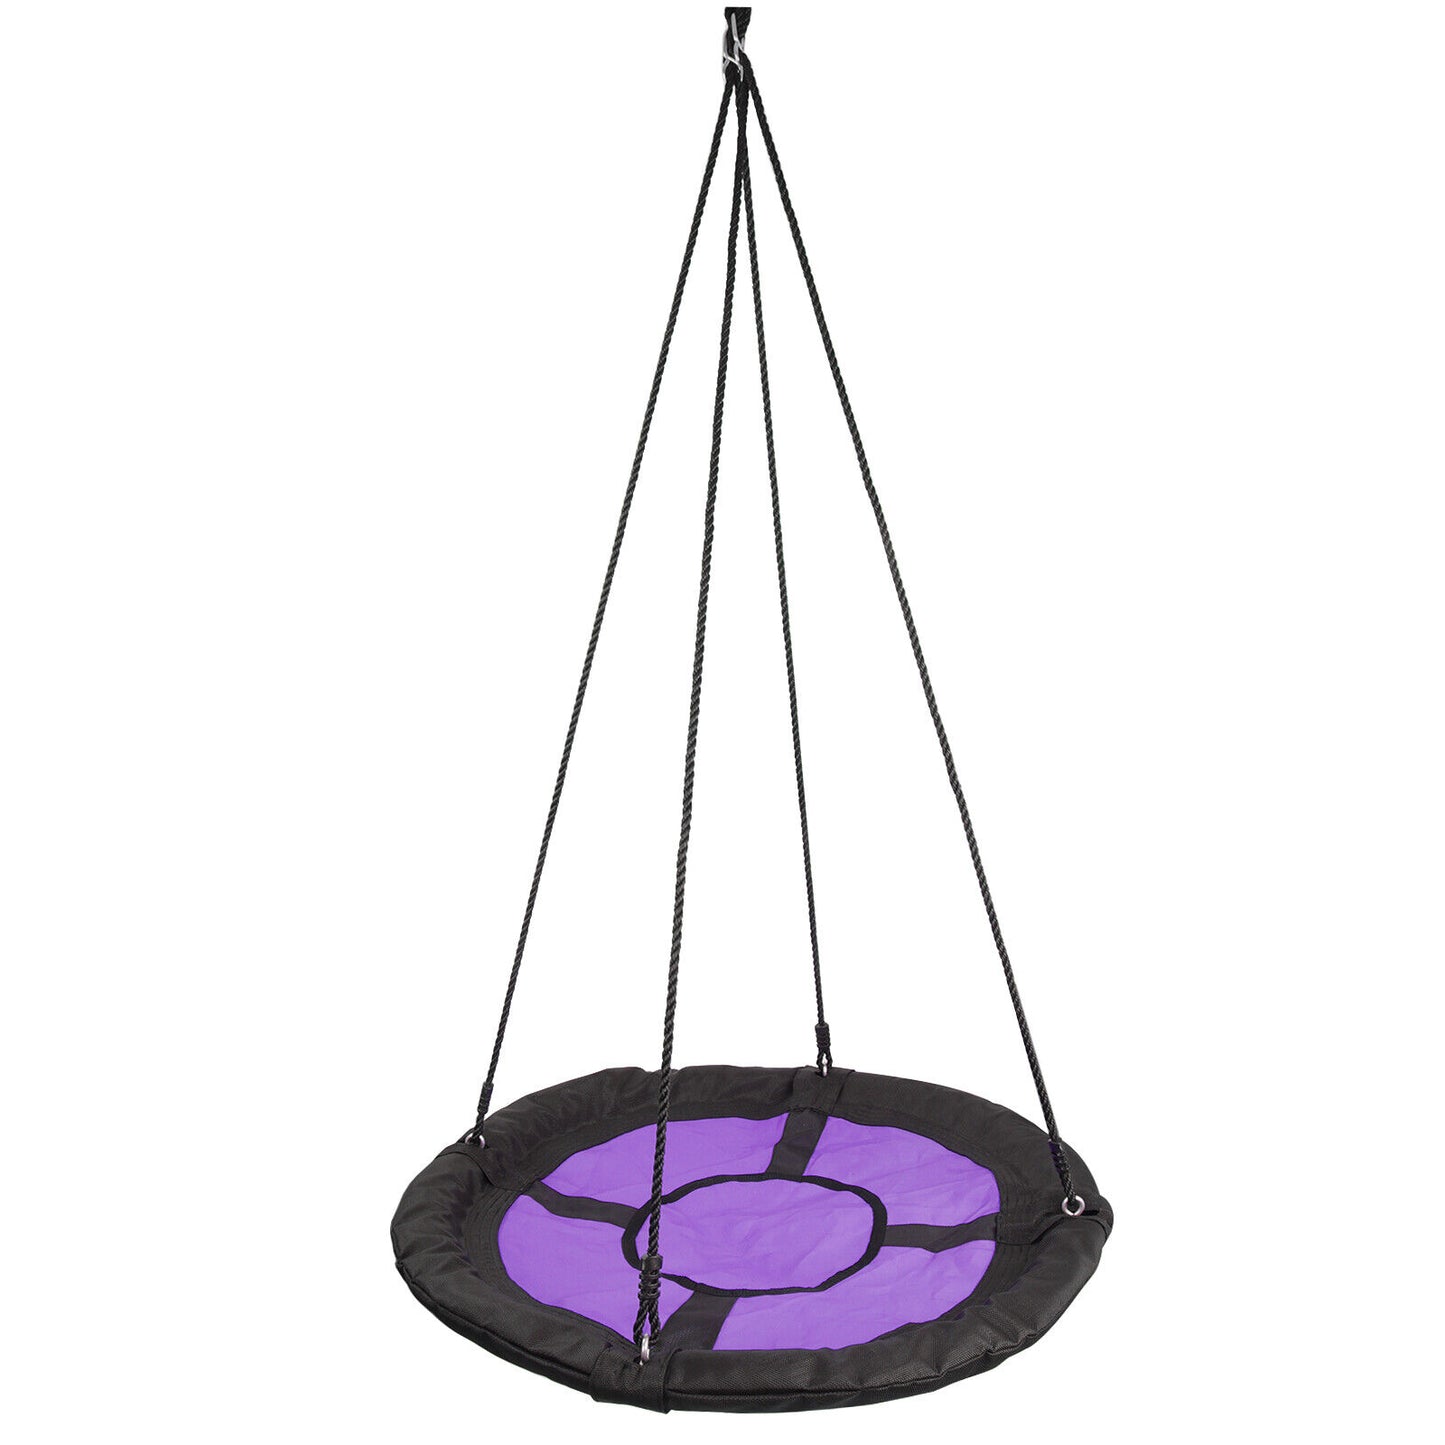 Round Hanging Rope Web Tree Swing Seat Kids Outdoor Garden Play Toy 100cm/40''